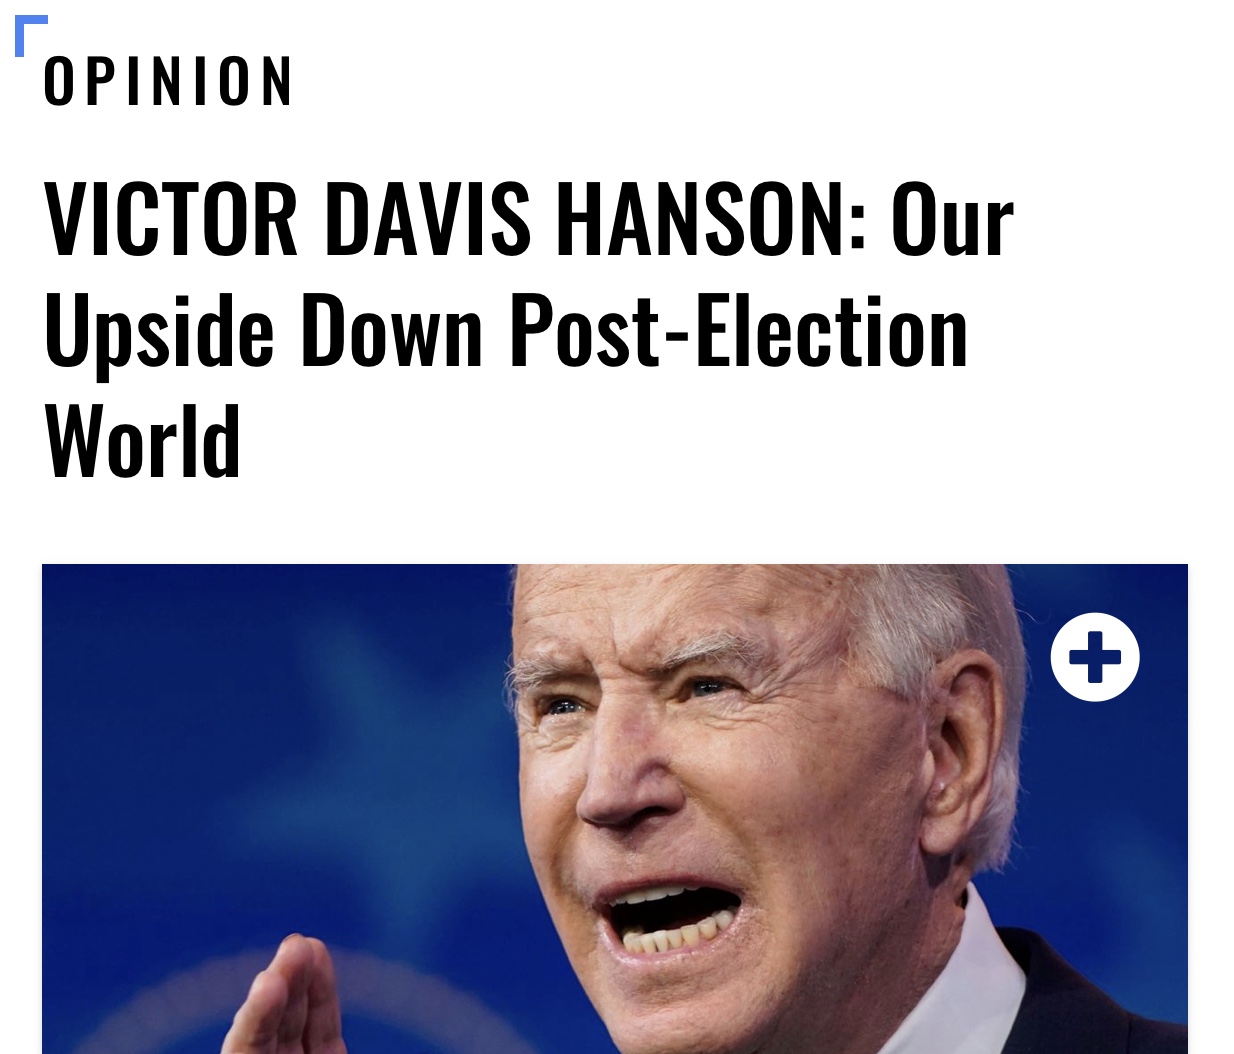 VICTOR DAVIS HANSON: Our Upside Down Post-Election World